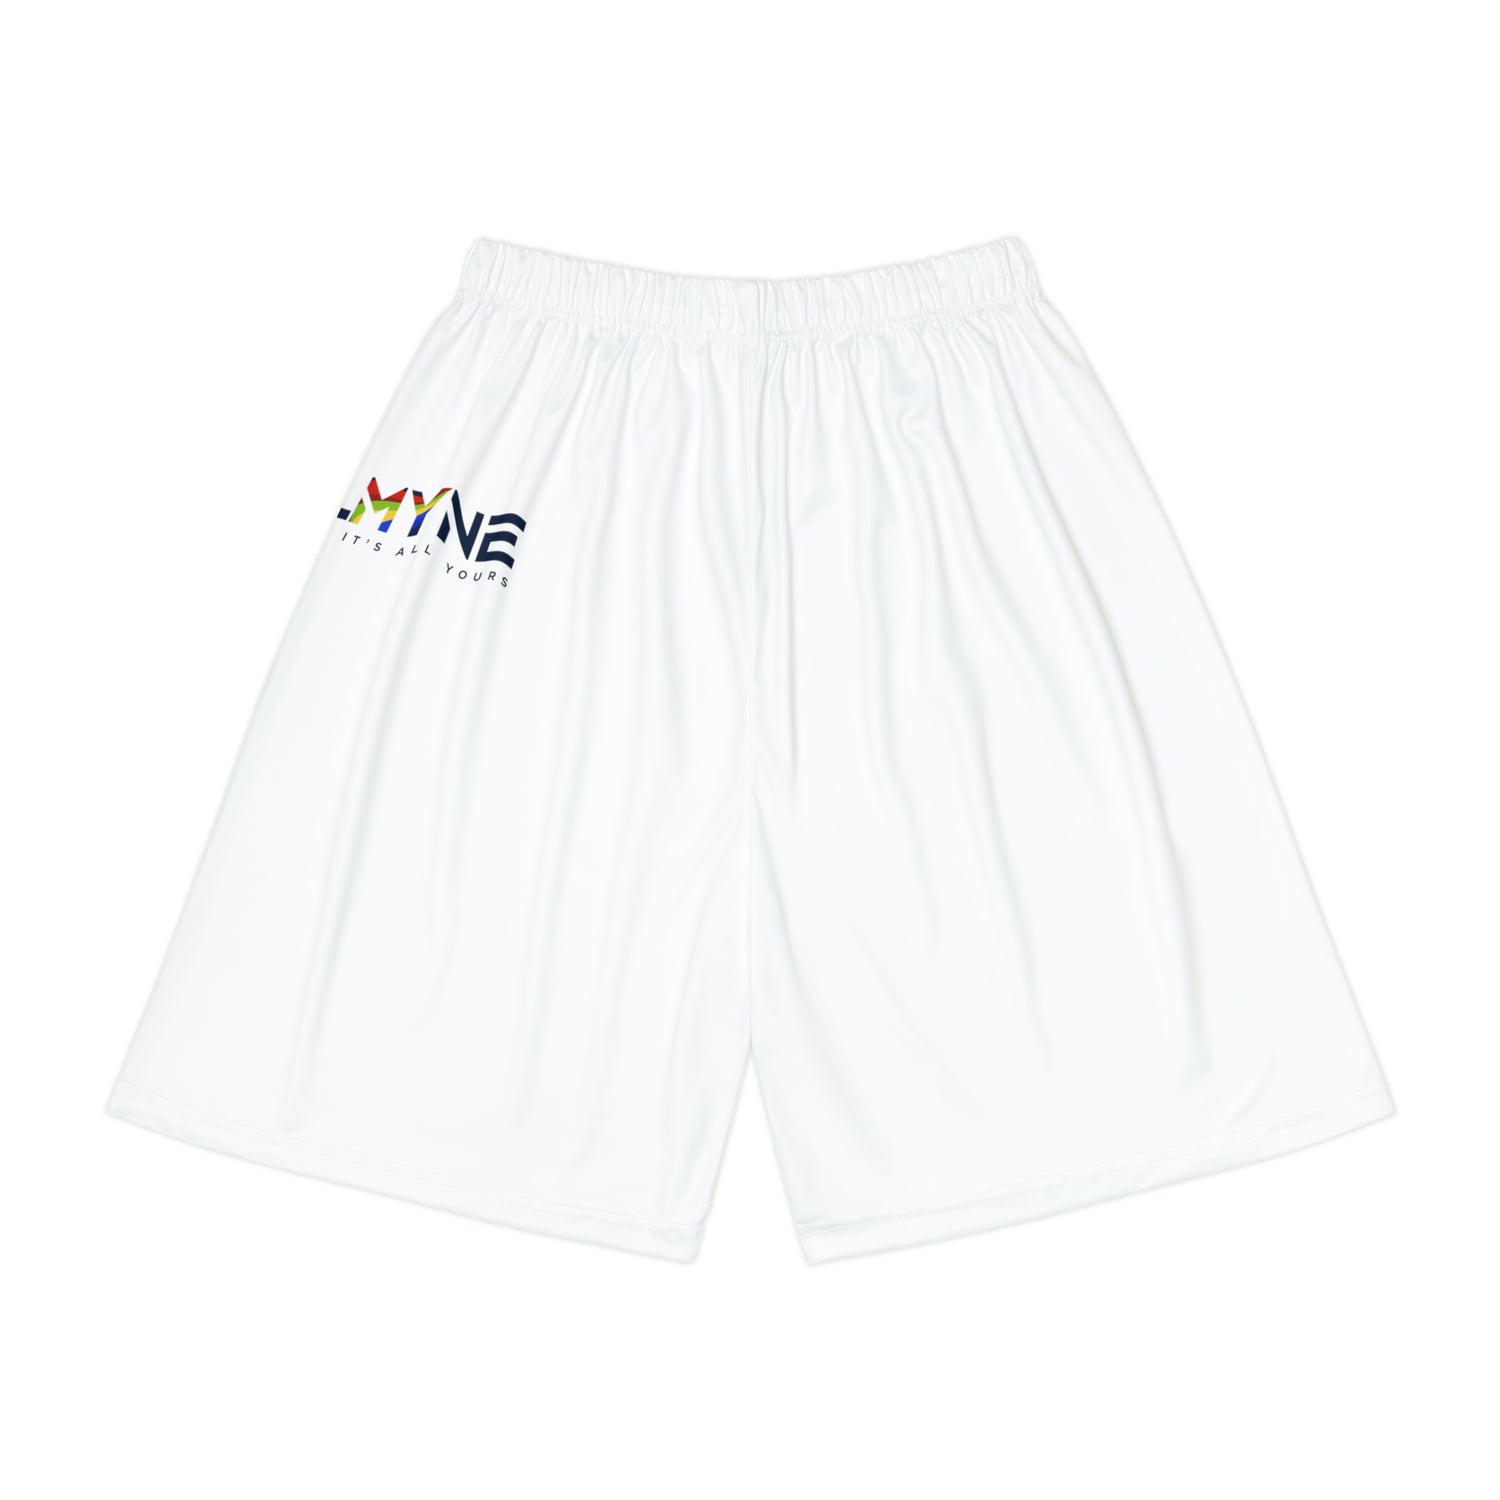 ALLMYNE Classic Shorts